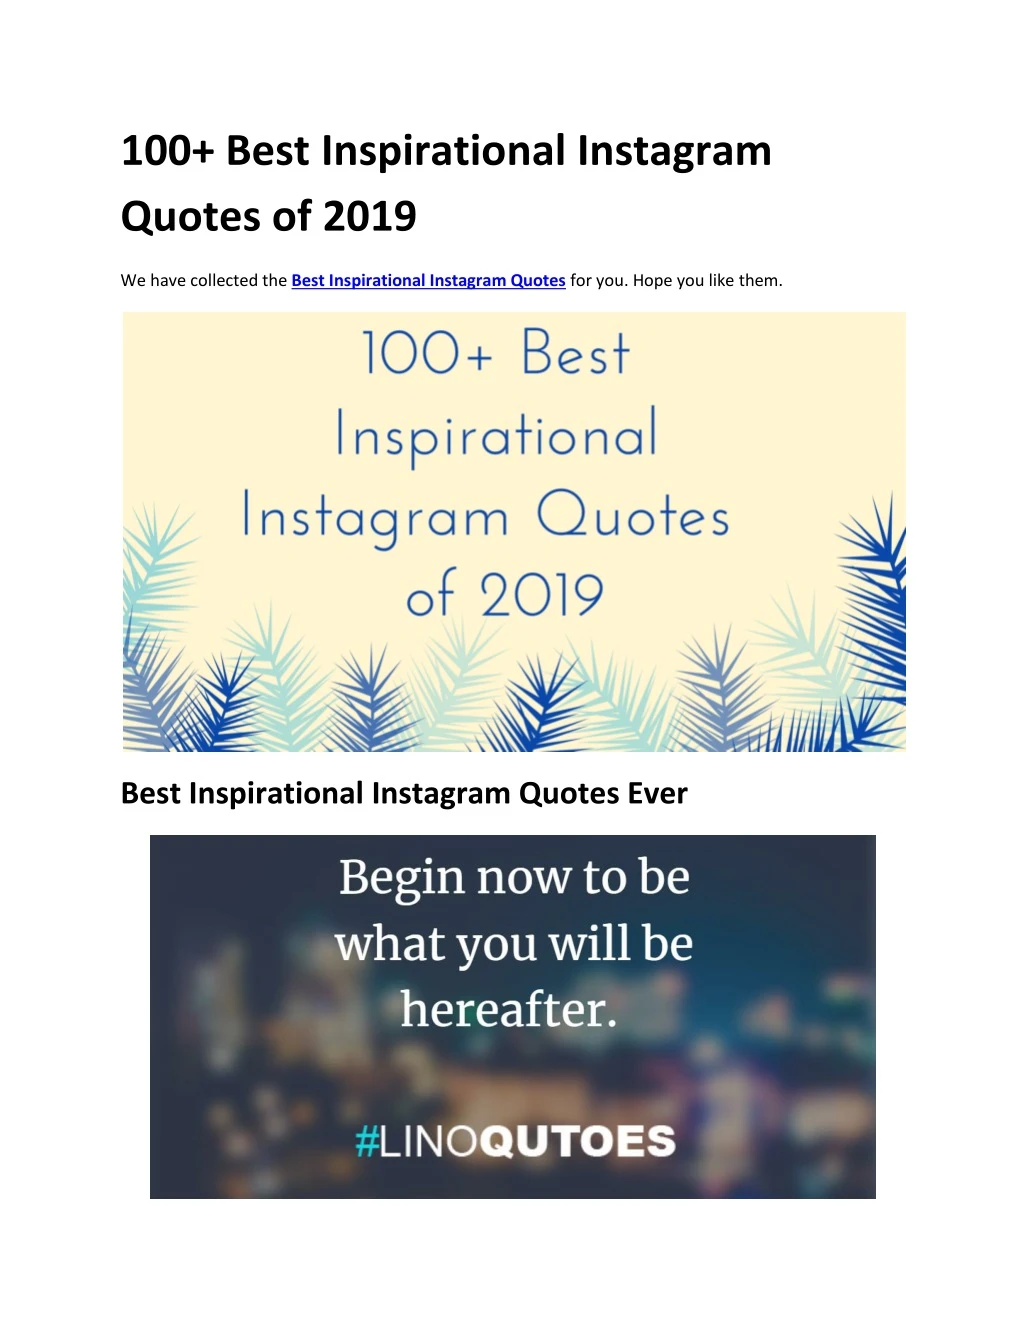 100 best inspirational instagram quotes of 2019